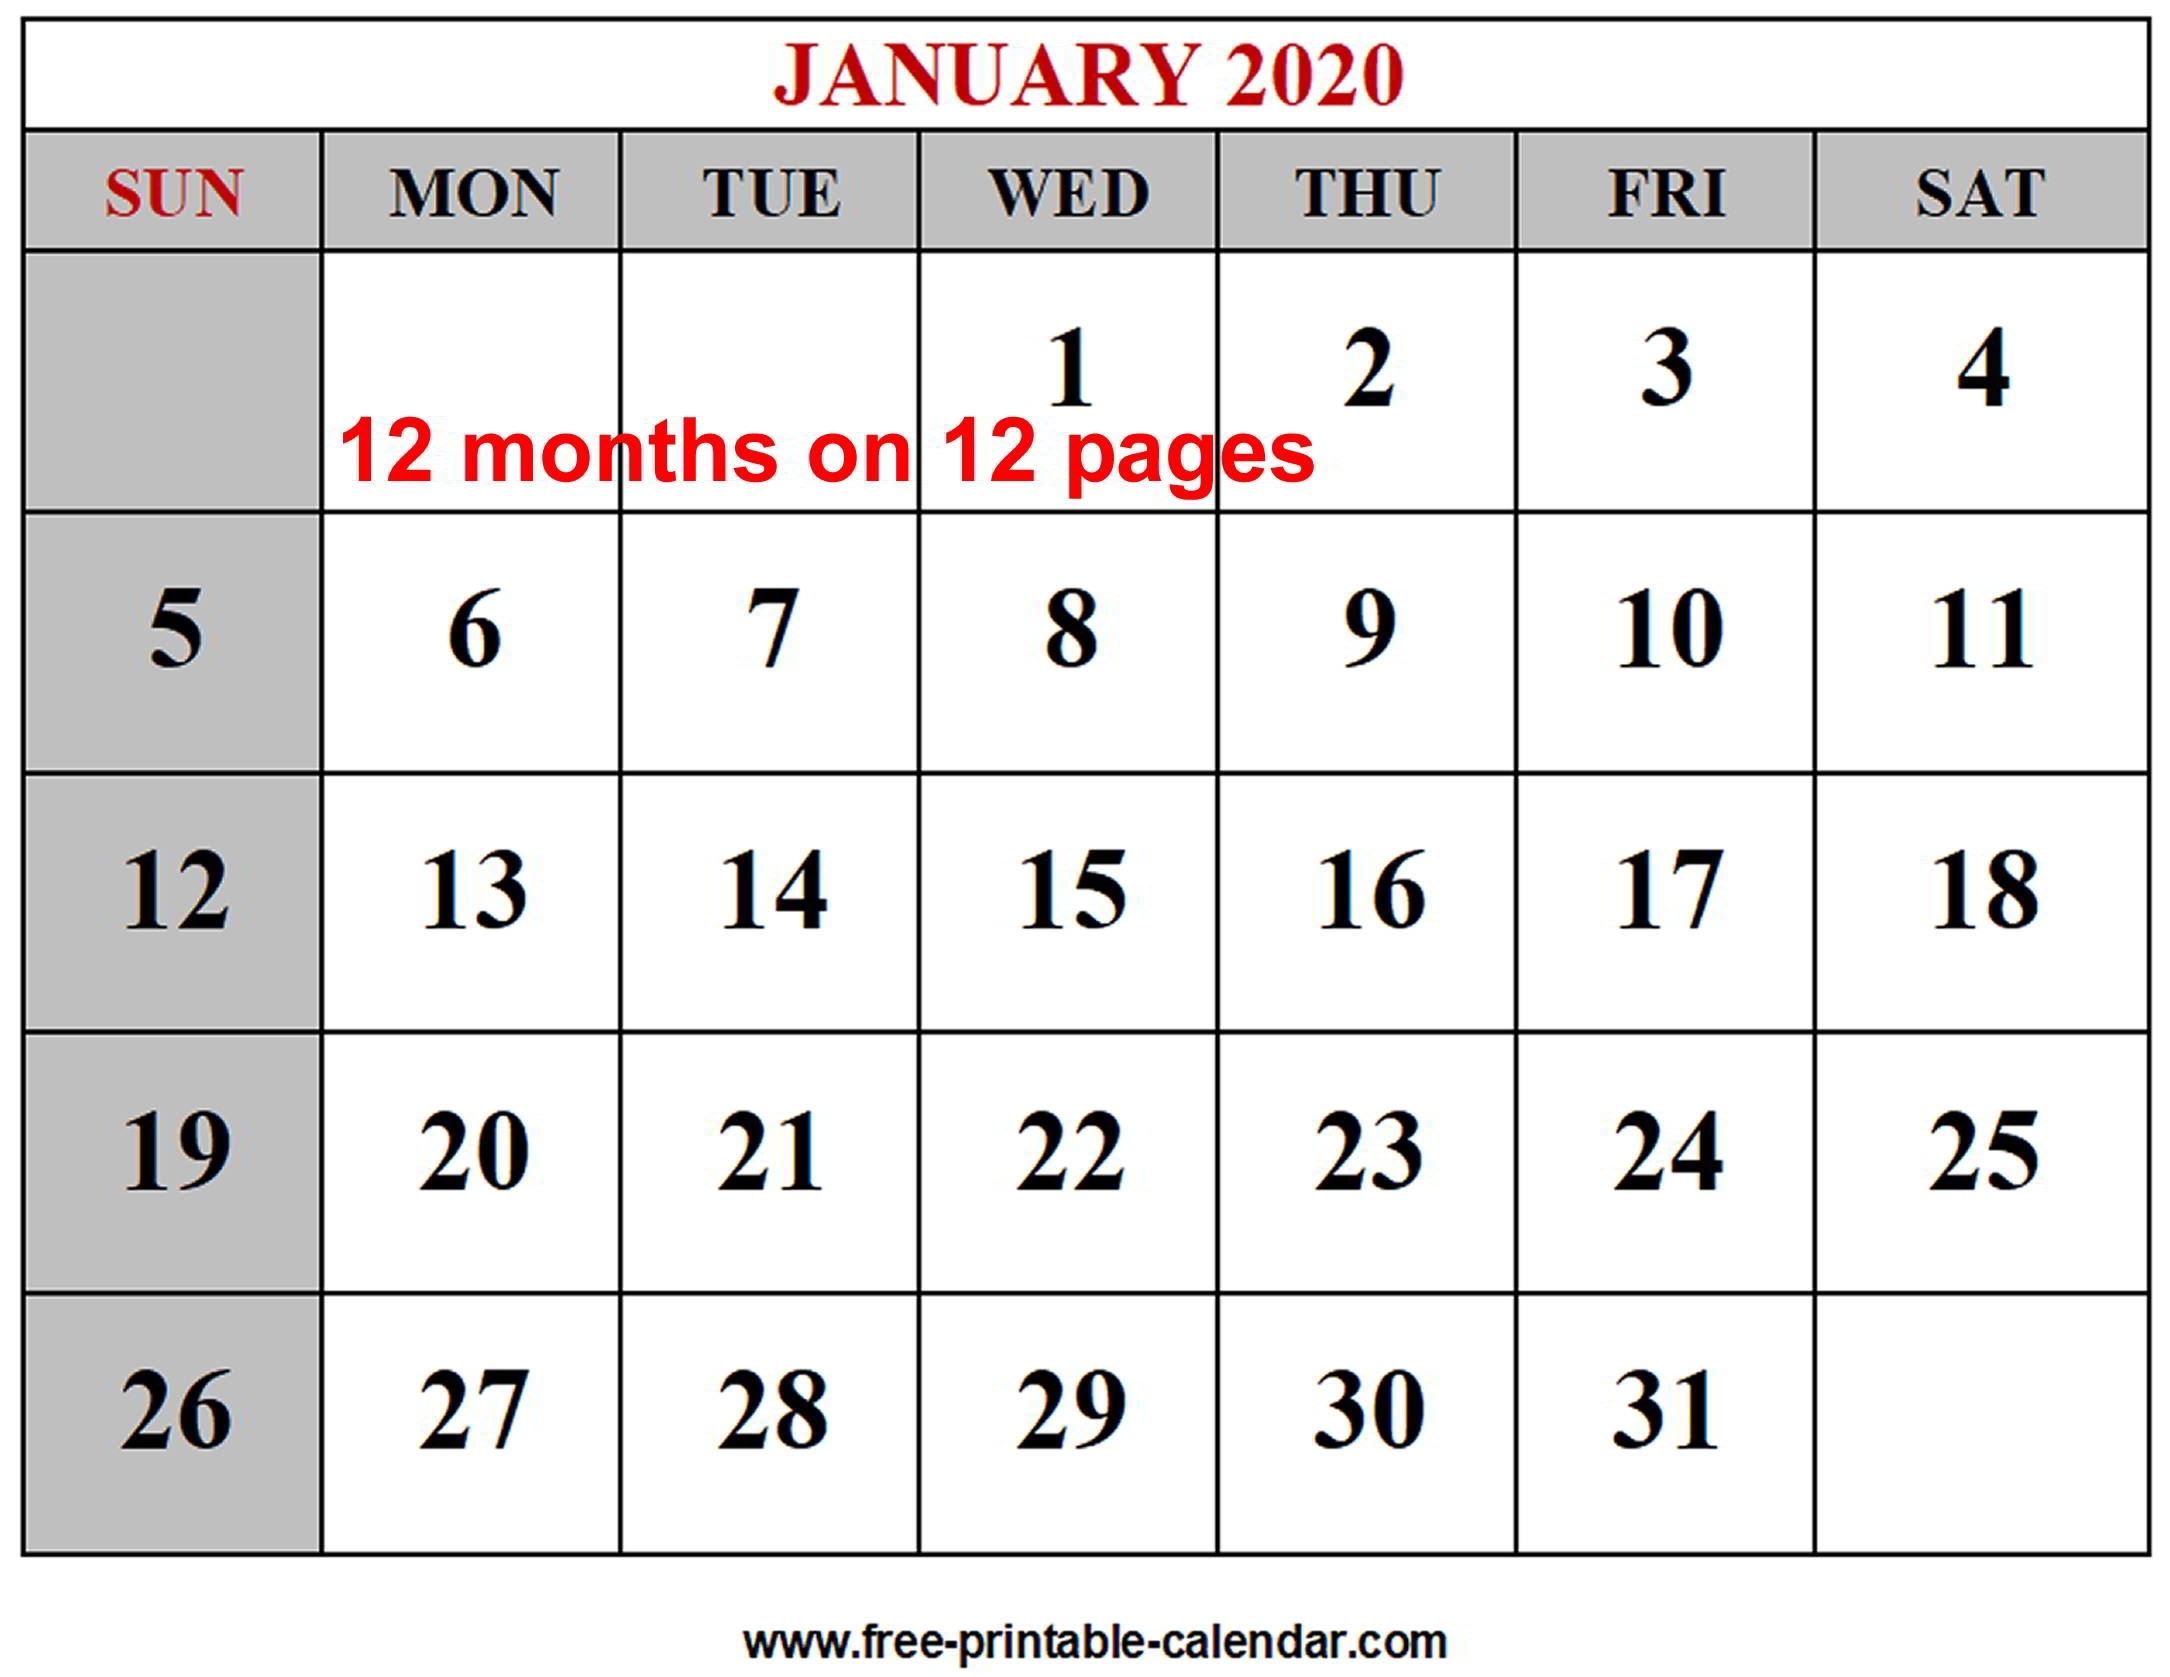 Year 2020 Calendar Templates - Free-Printable-Calendar Free Printable Monthly Calendar 2020